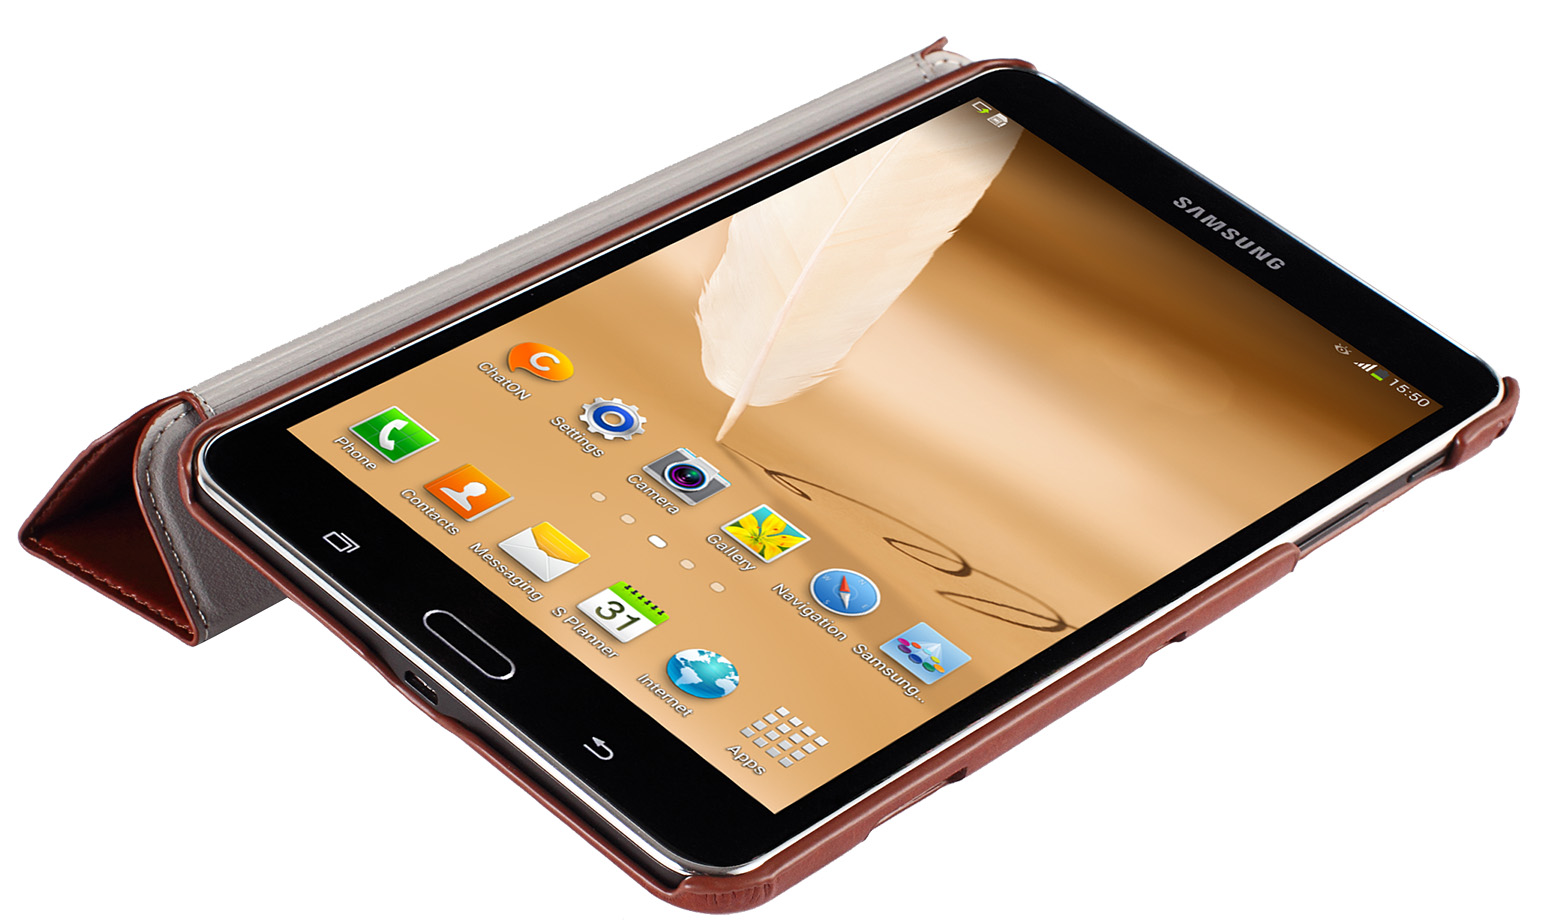 Чехол-книжка G-Case Slim Premium для Samsung Galaxy Tab 4 8.0 Brown